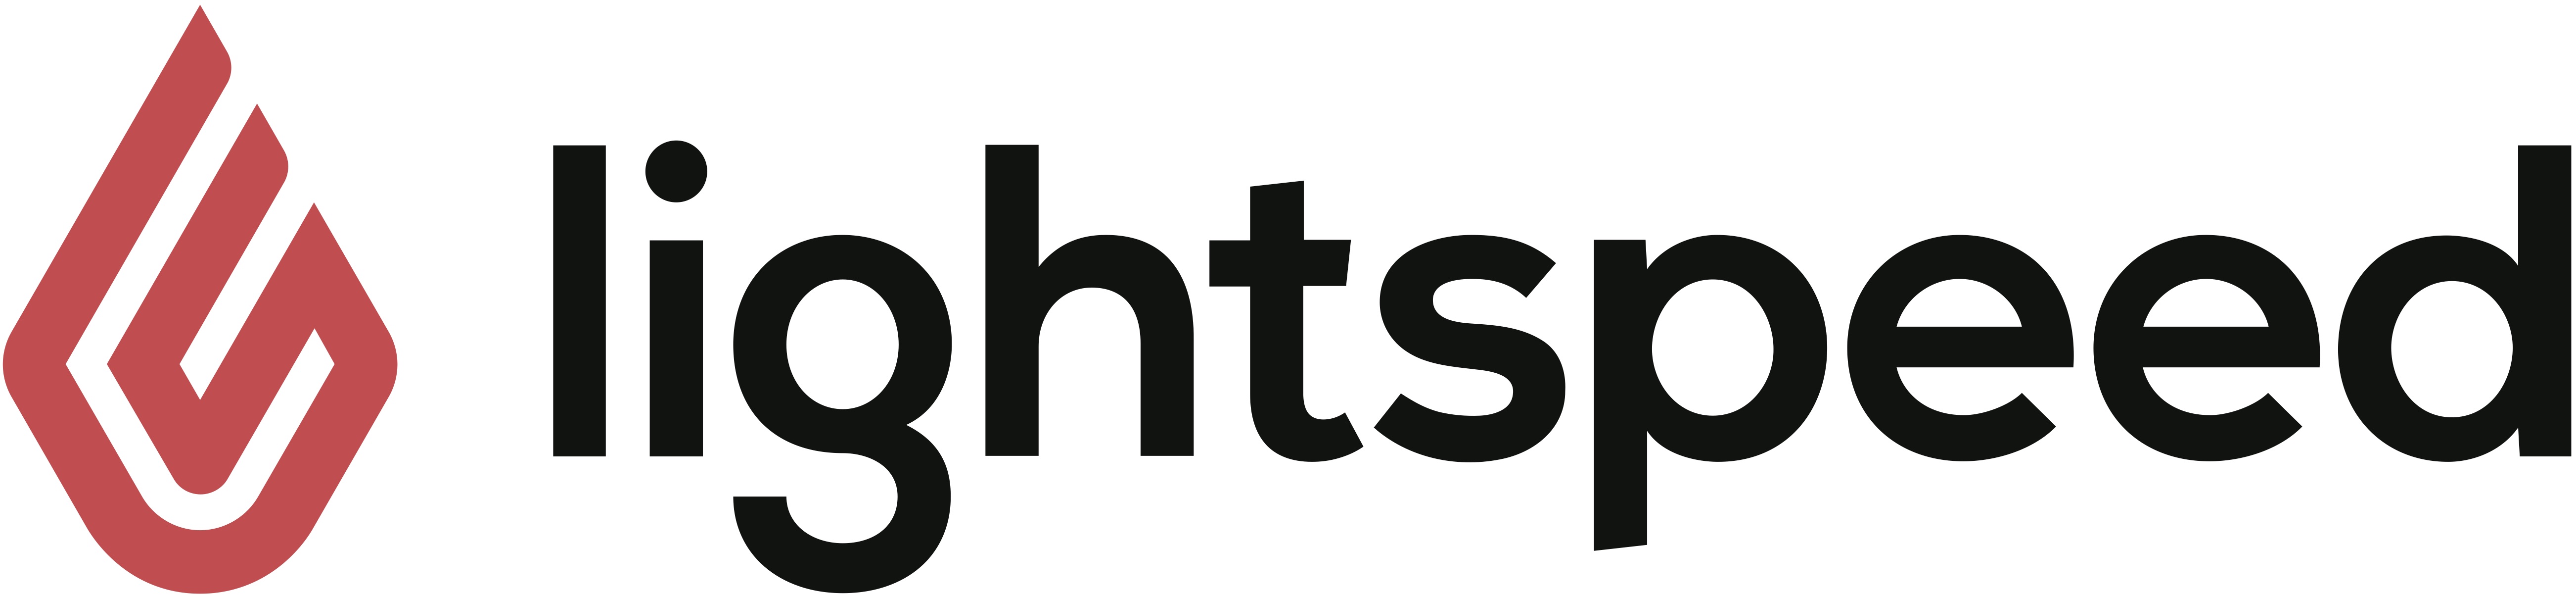 lightspeed logo 